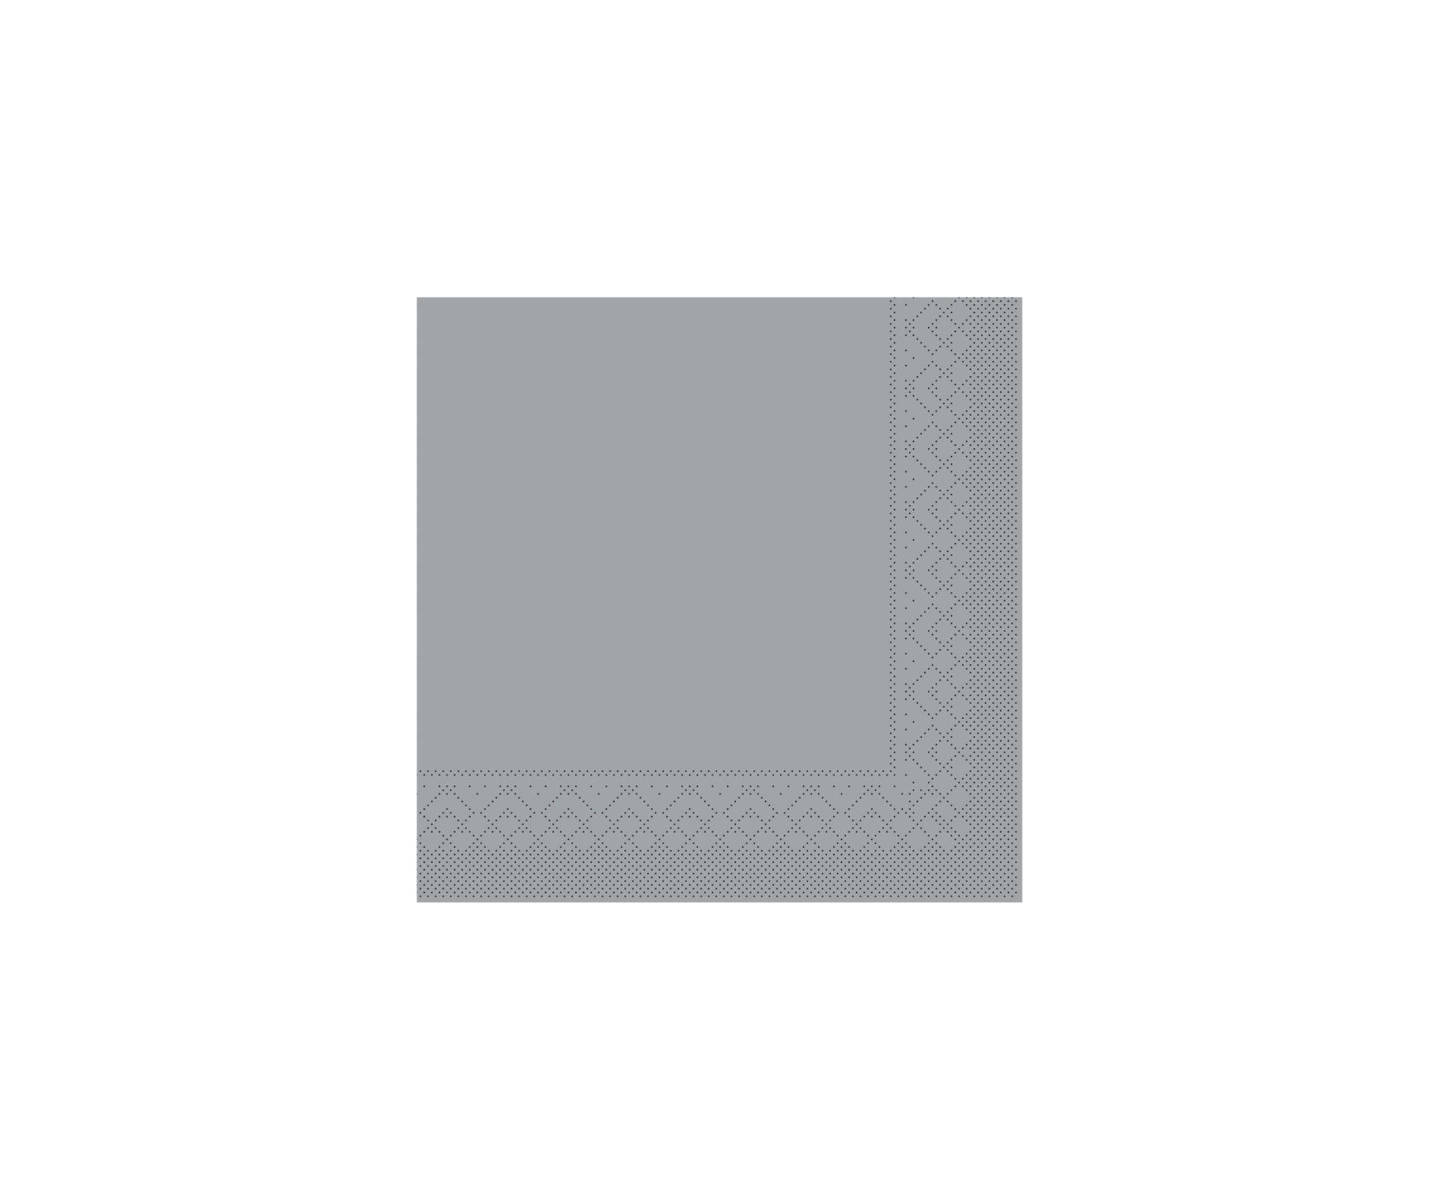 Farbservietten Grau 1/4 Falz, 3-lagig 25x25 cm, 1200 Stück